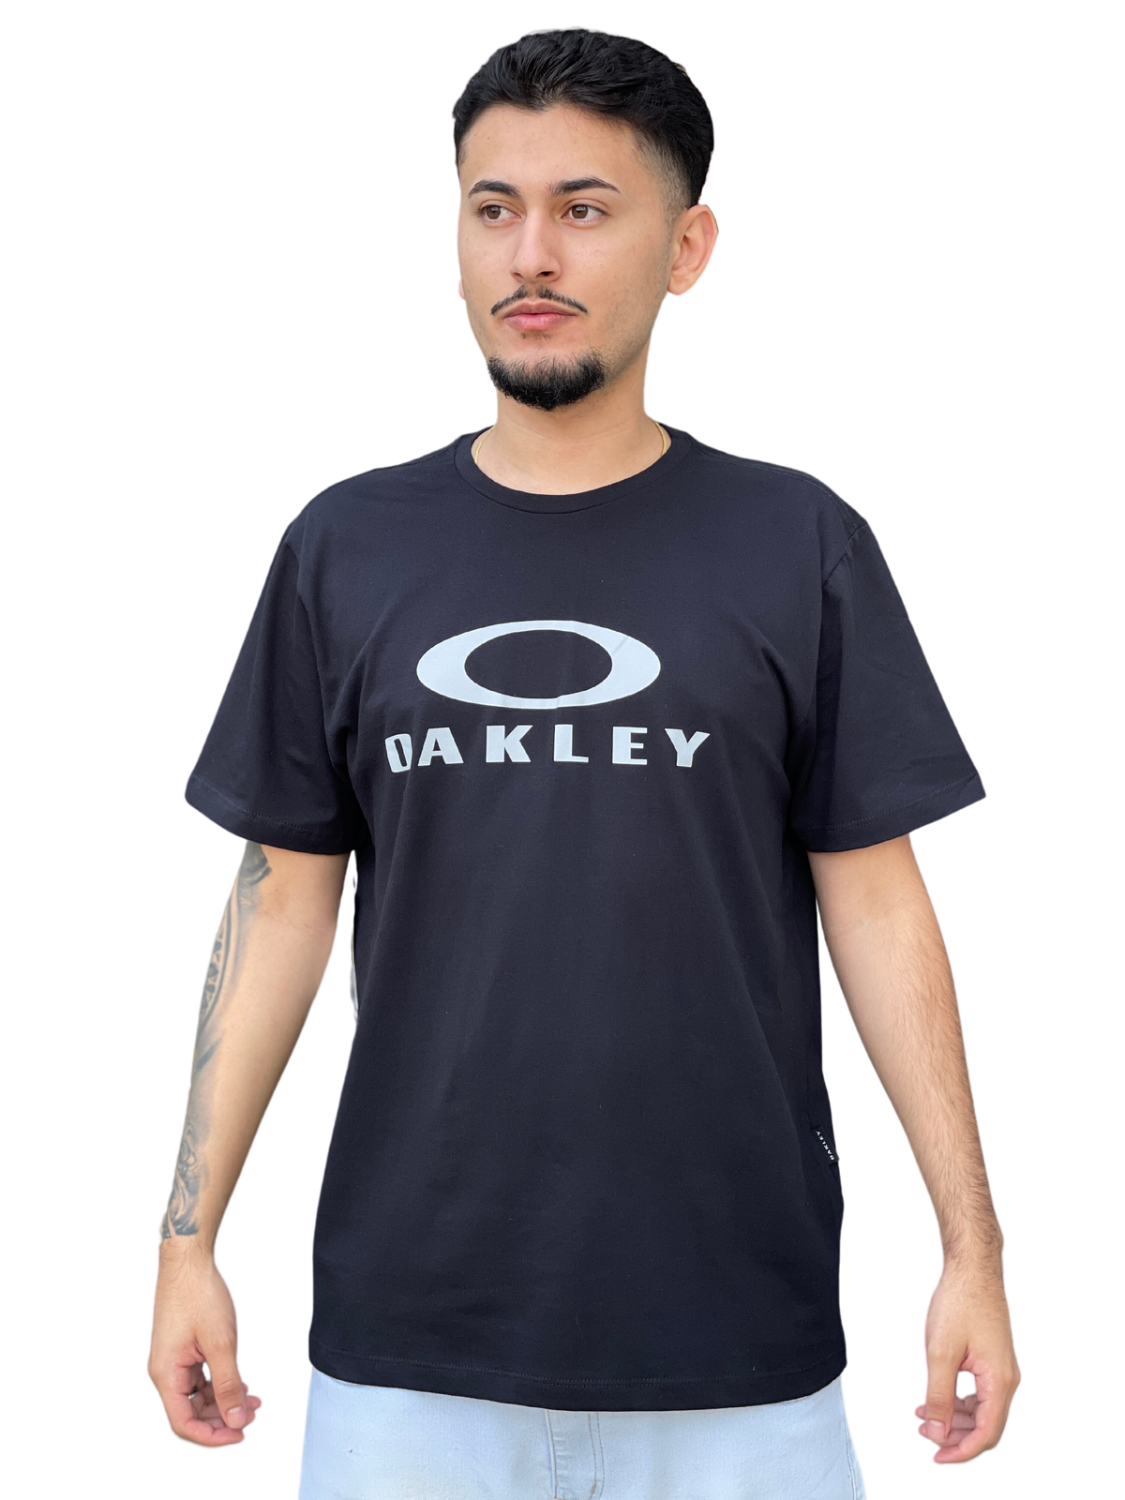 Camiseta Oakley Wind SS Tee - Preta